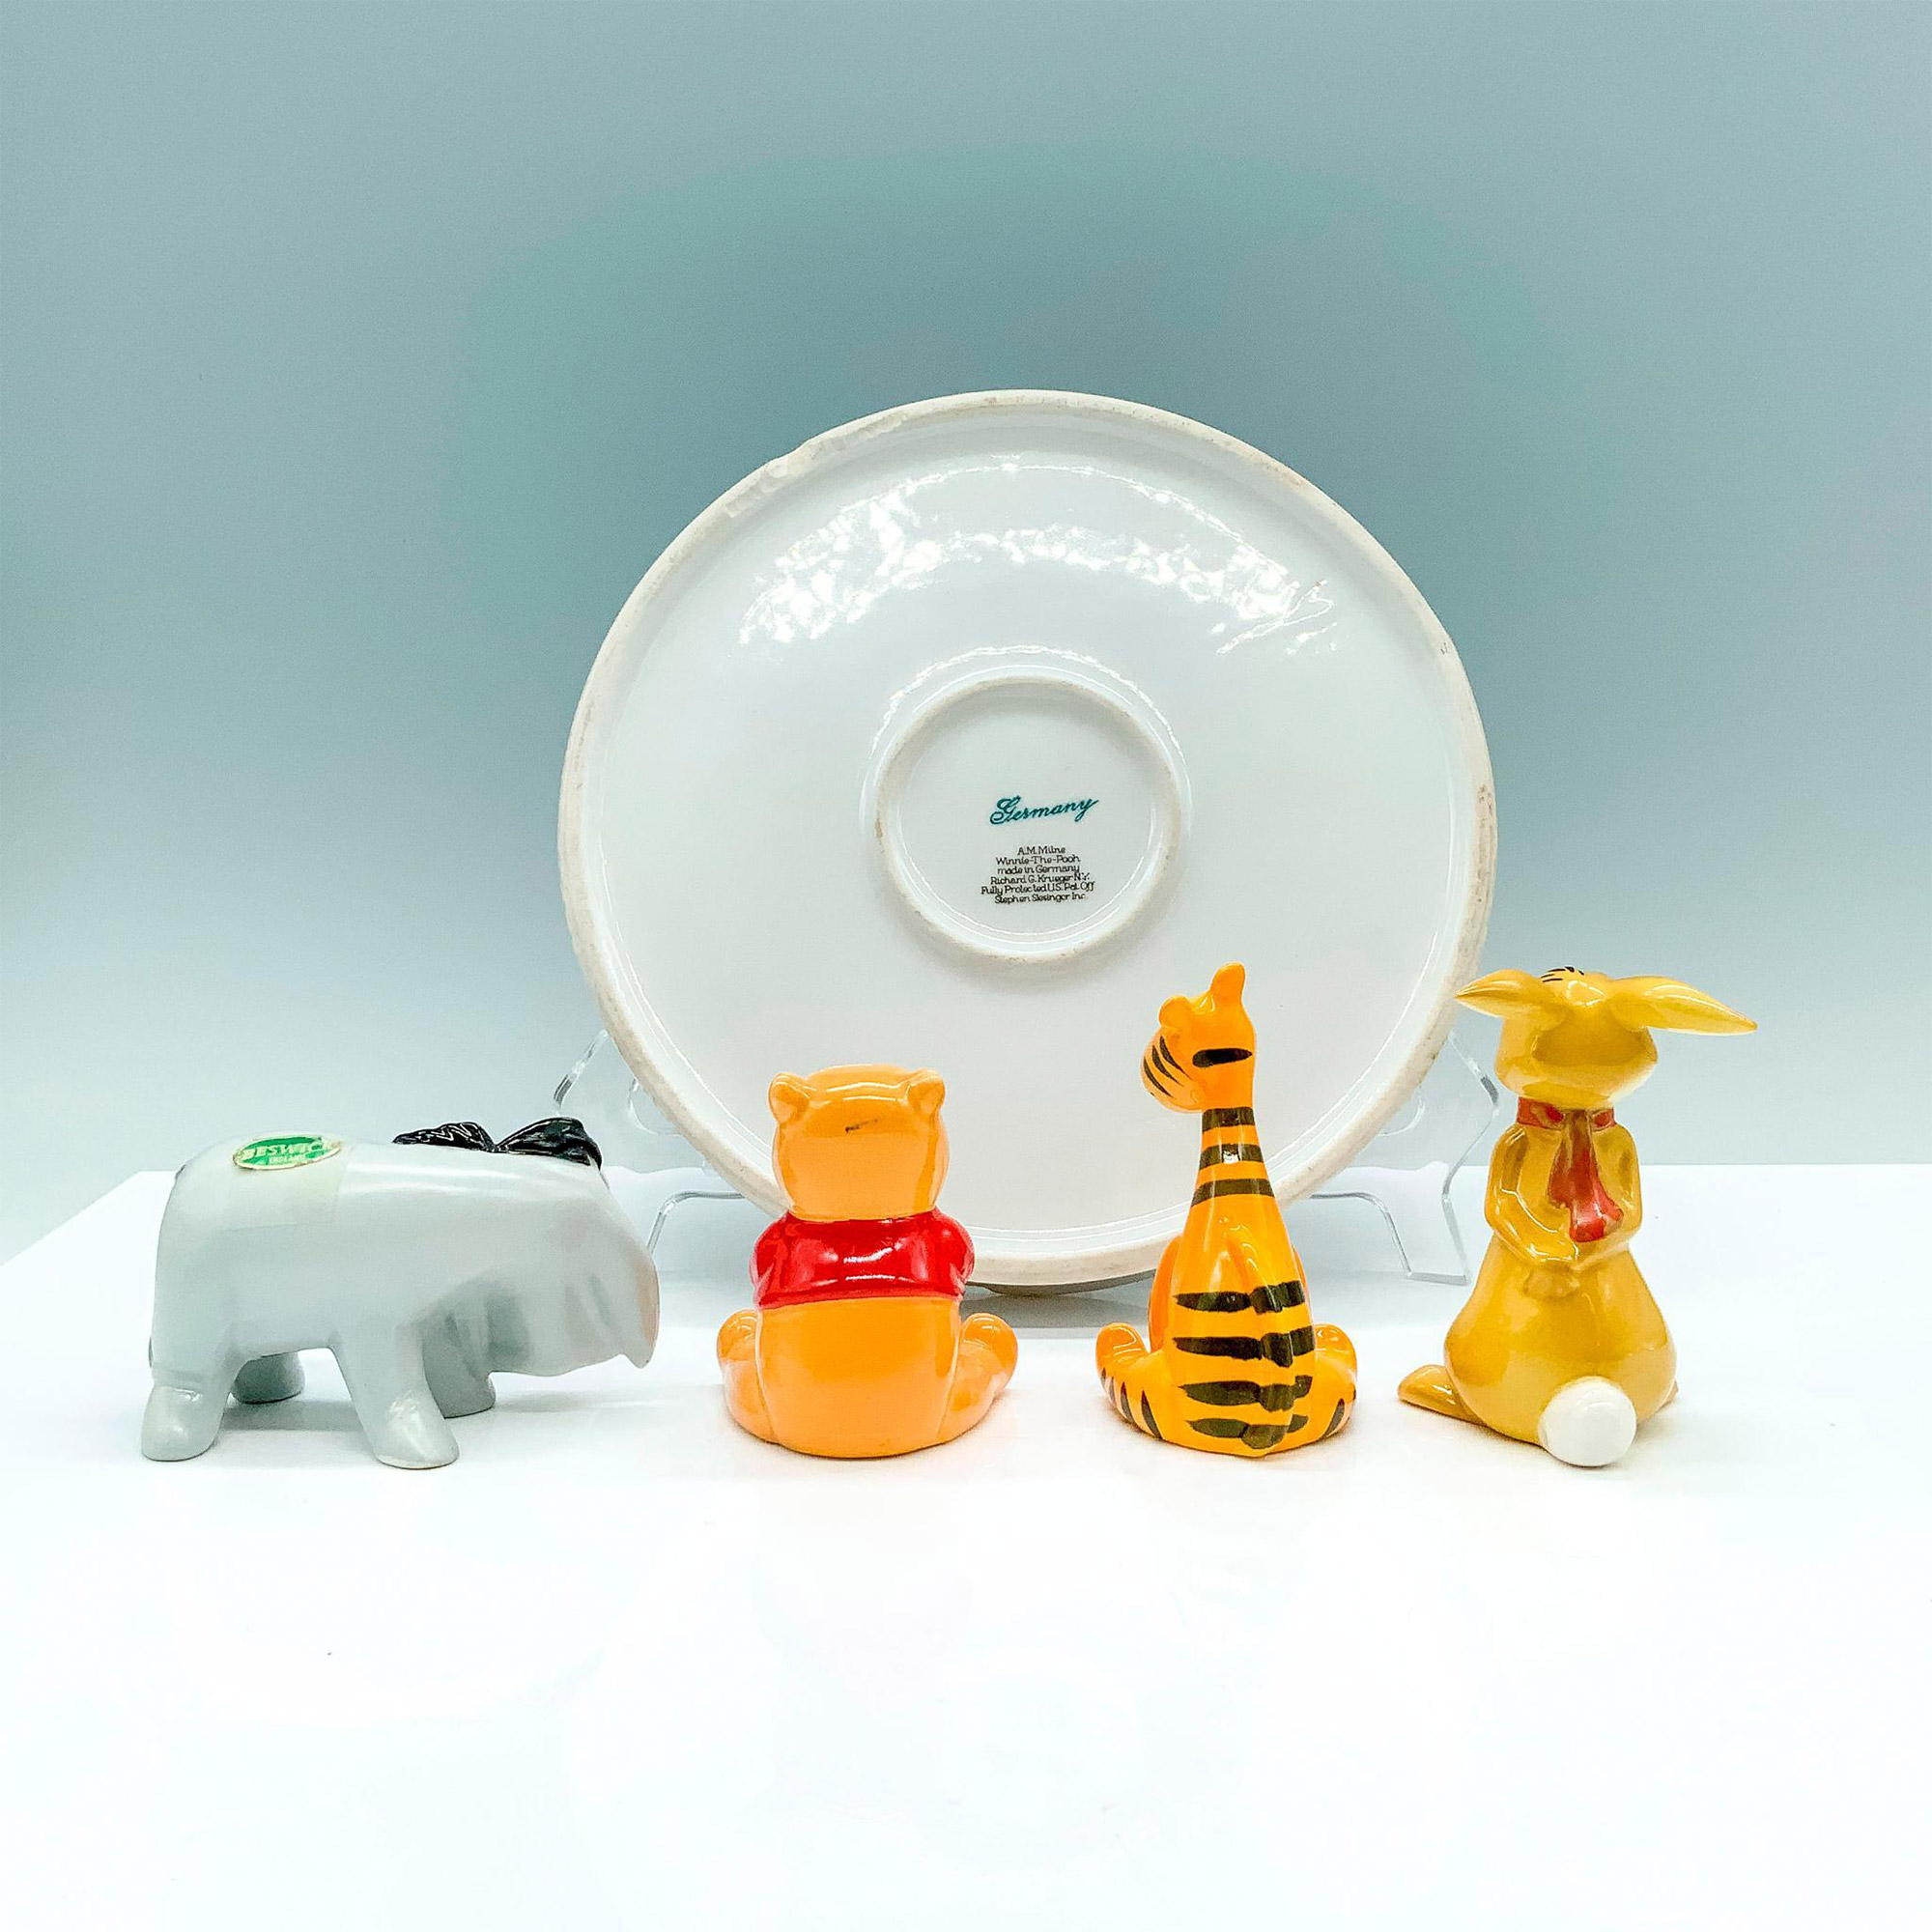 5pc Winnie the Pooh Beswick Figurines and Oatmeal Bowl Set - Image 3 of 4